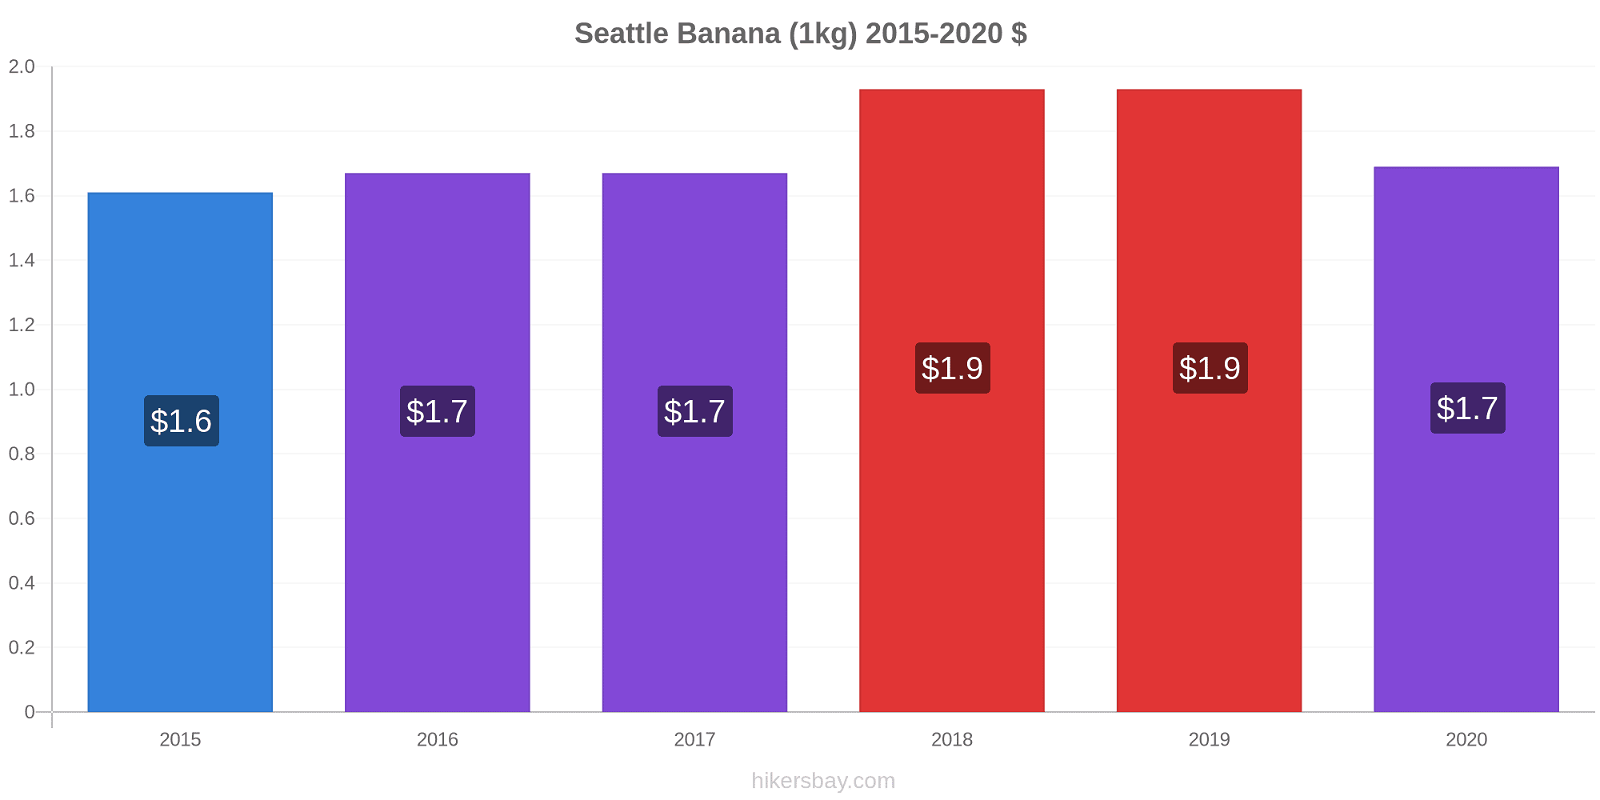 Seattle modificări de preț Banana (1kg) hikersbay.com